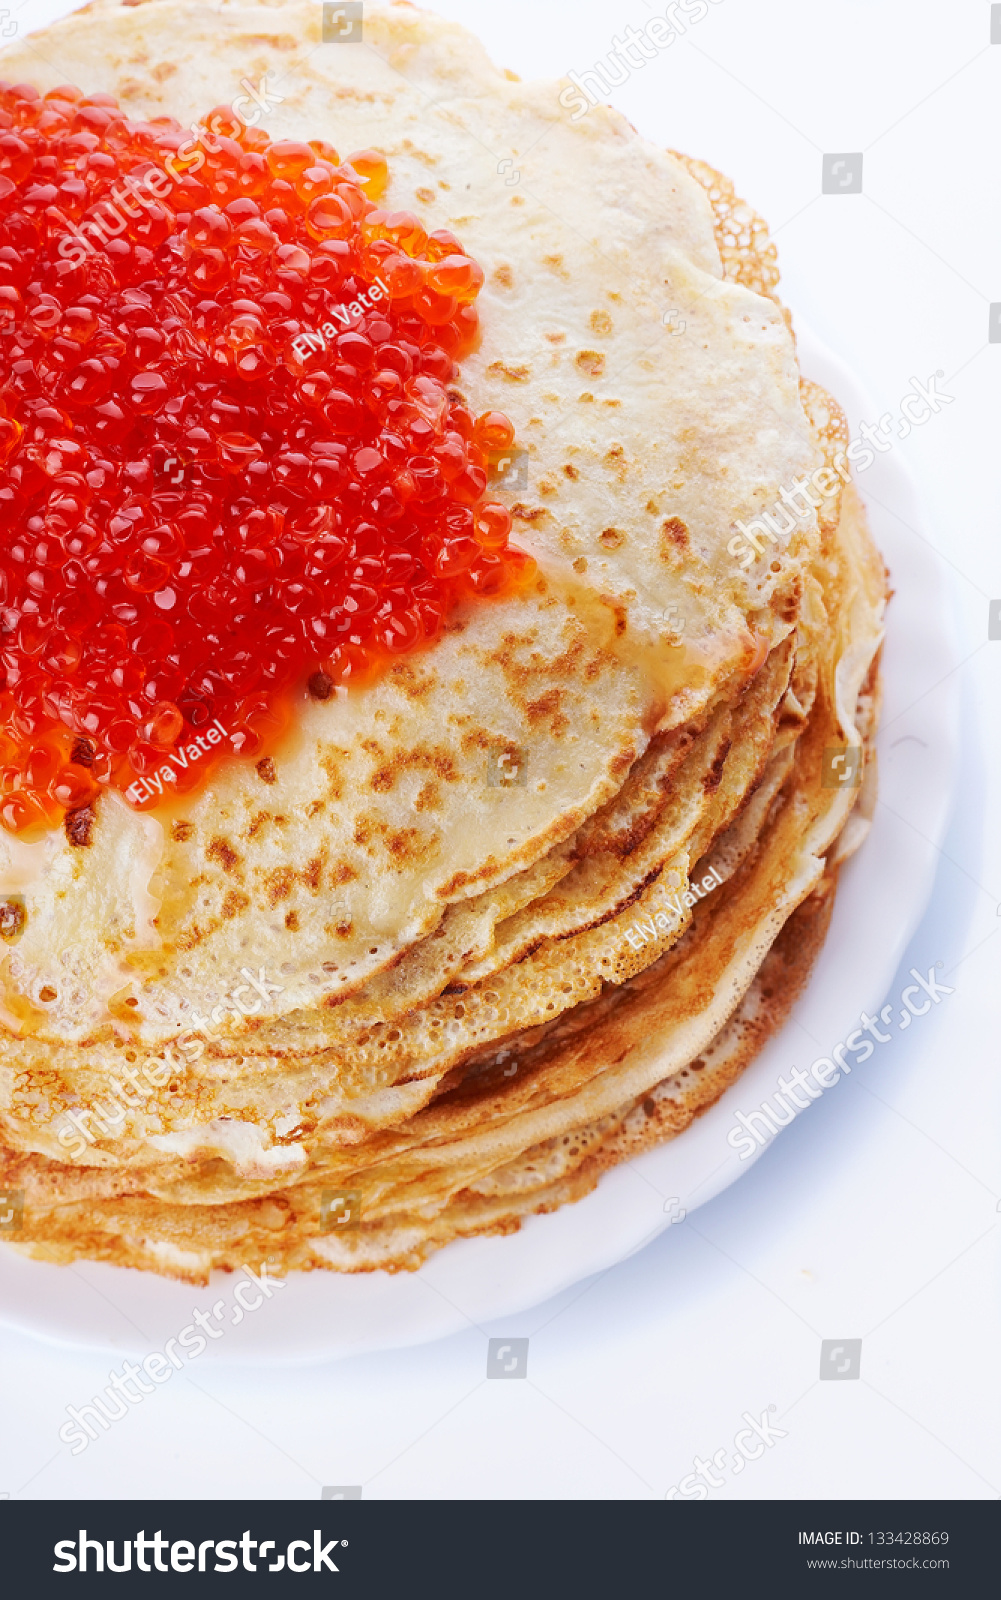 Pancakes with red caviar. Pile of pancakes. Pancakes on a plate. Red caviar. #133428869